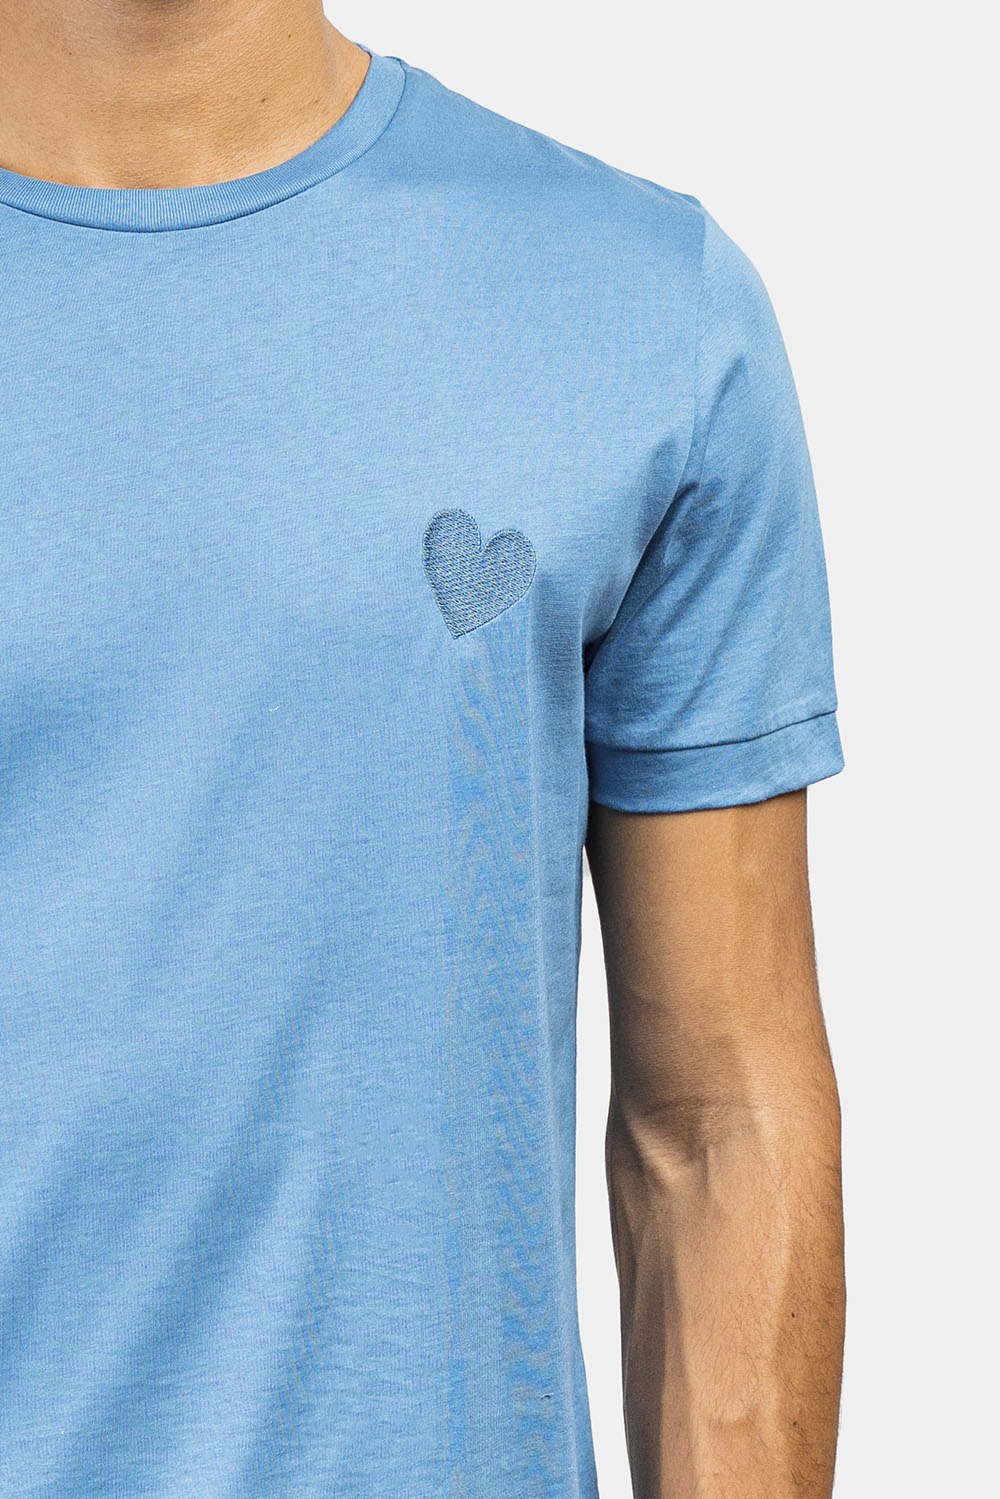 Classic Embroidery Heart Faince T-shirt